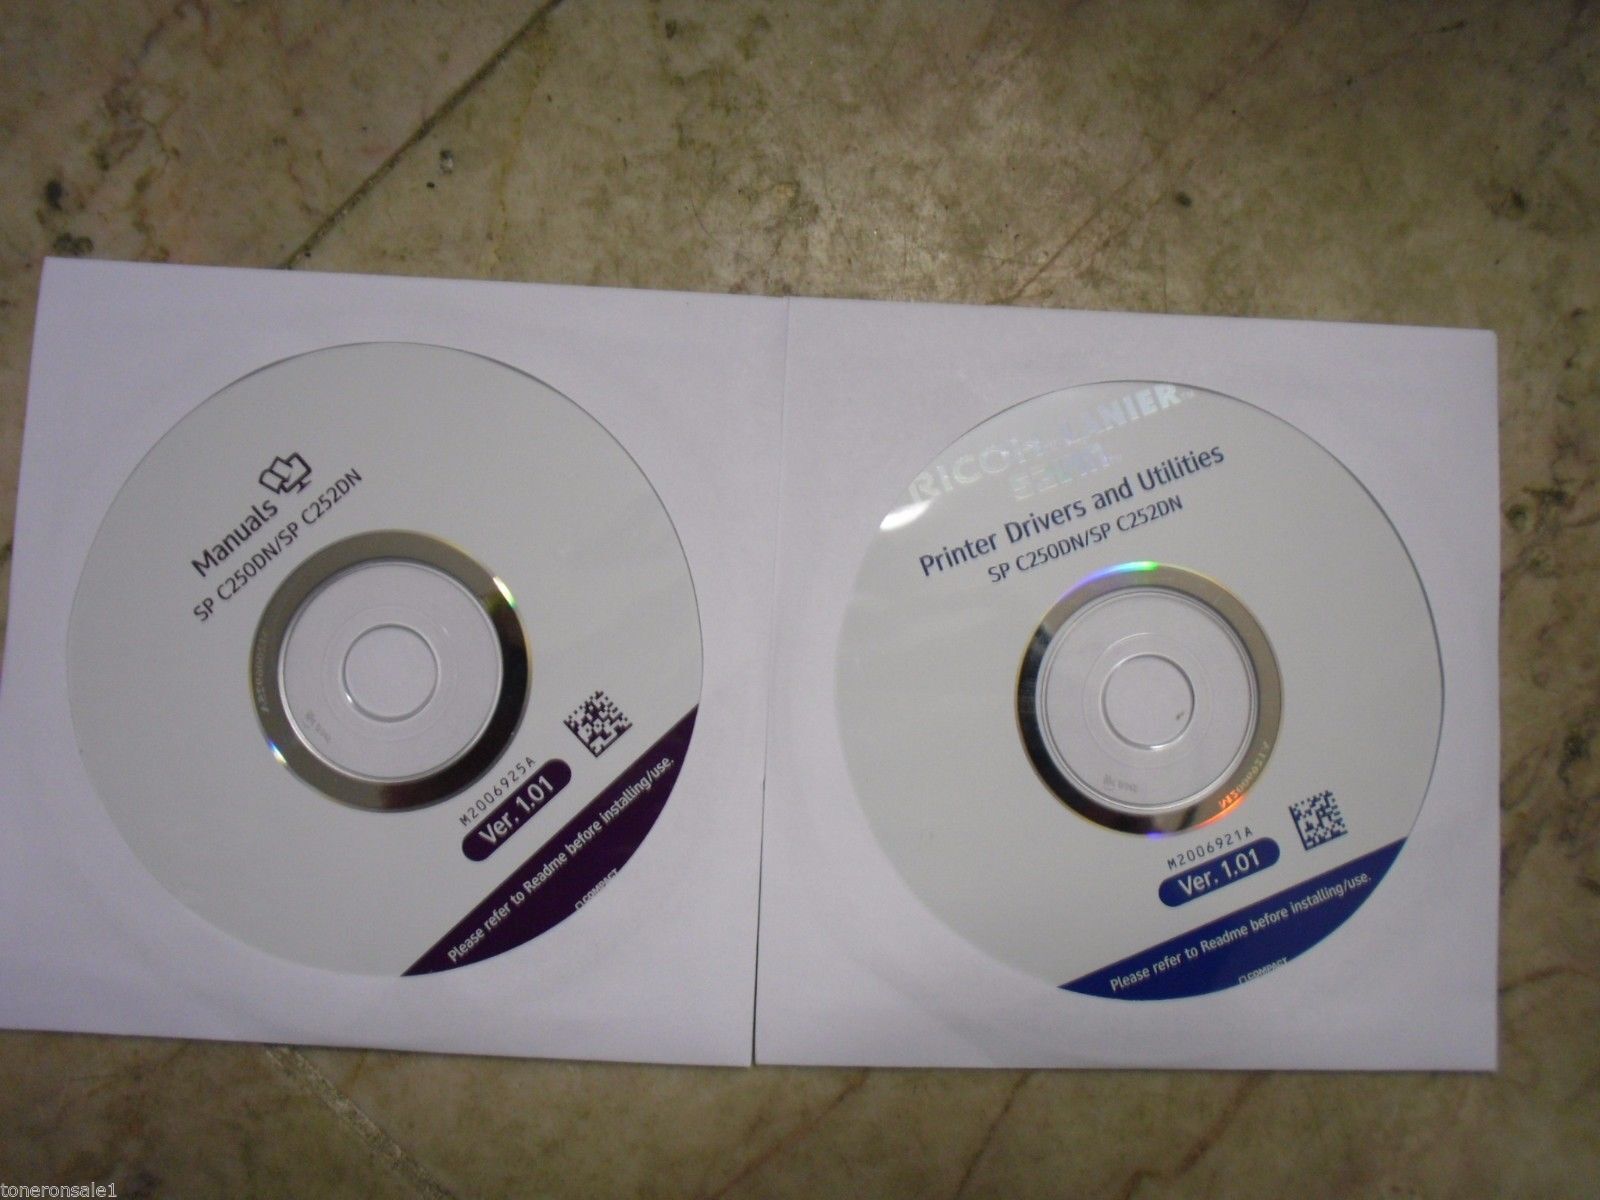 Genuine Ricoh Aficio Sp C250dn C252dn Manuals And Cd Printer Drivers Utilities